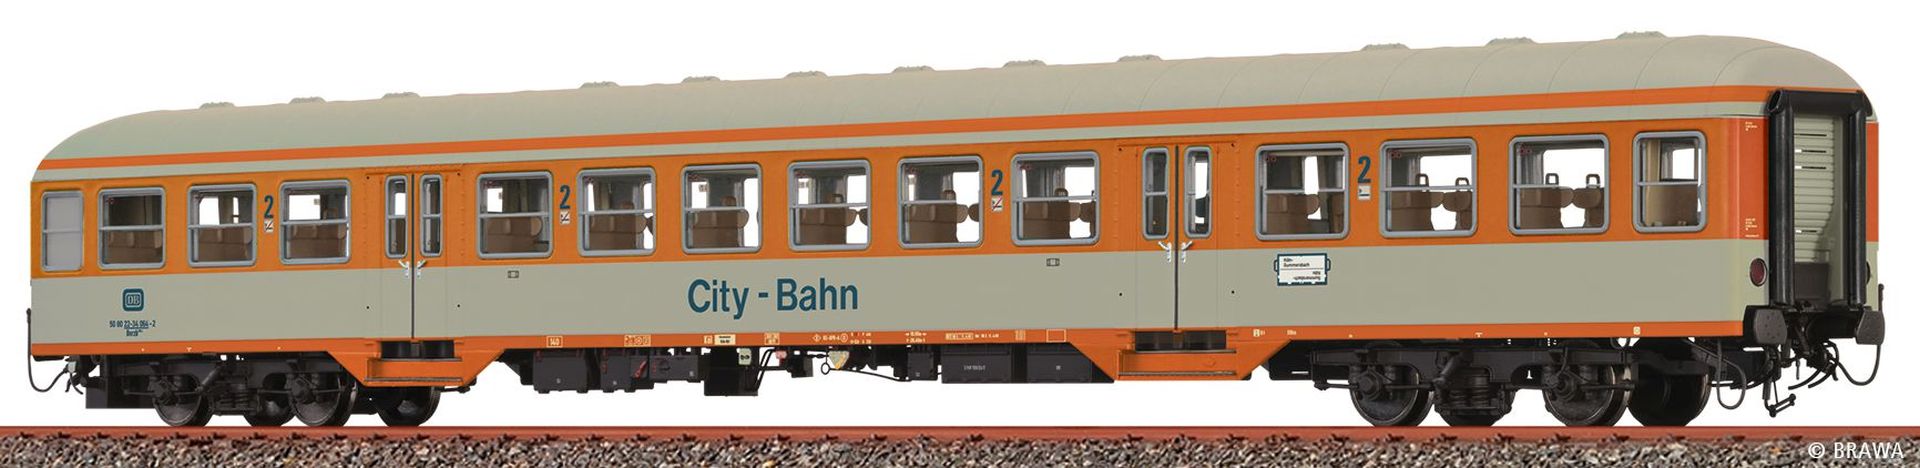 Brawa 46649 - Personenwagen Bnrzb 778.1 'City Bahn', DB, Ep.IV, AC-LED-Innenbeleuchtung